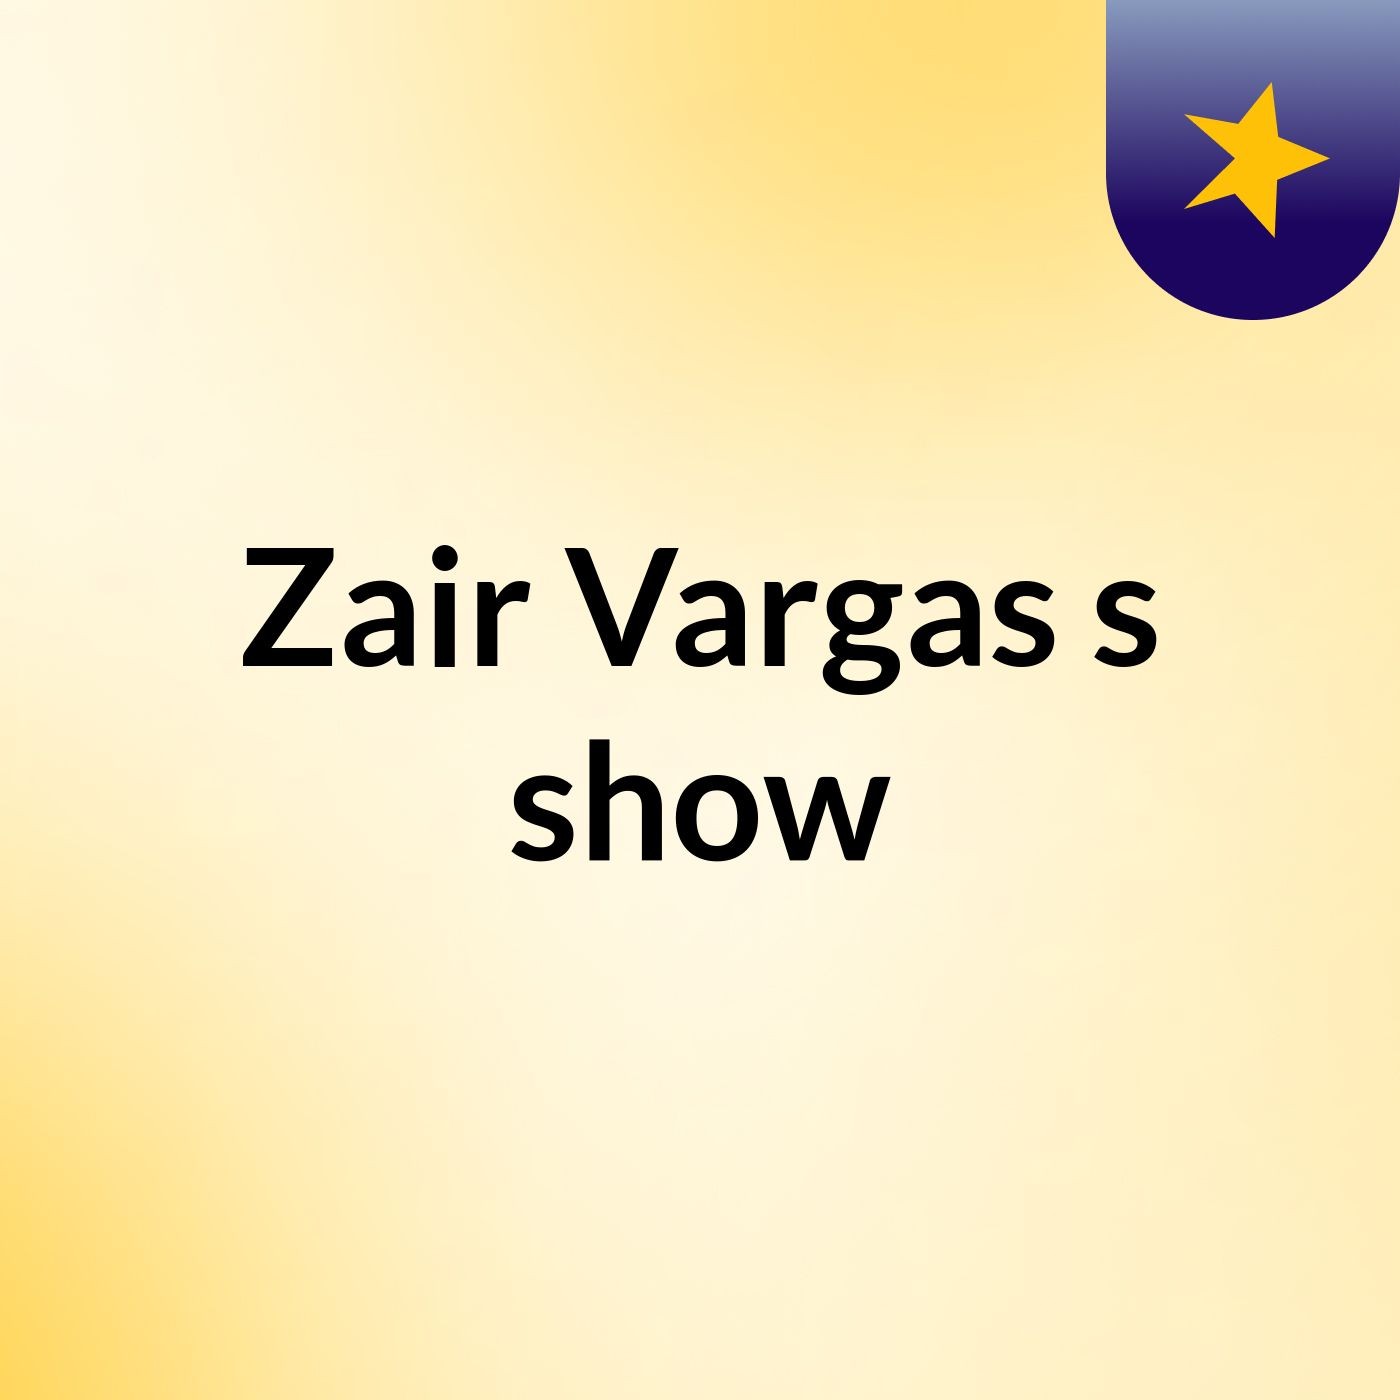 Zair Vargas's show